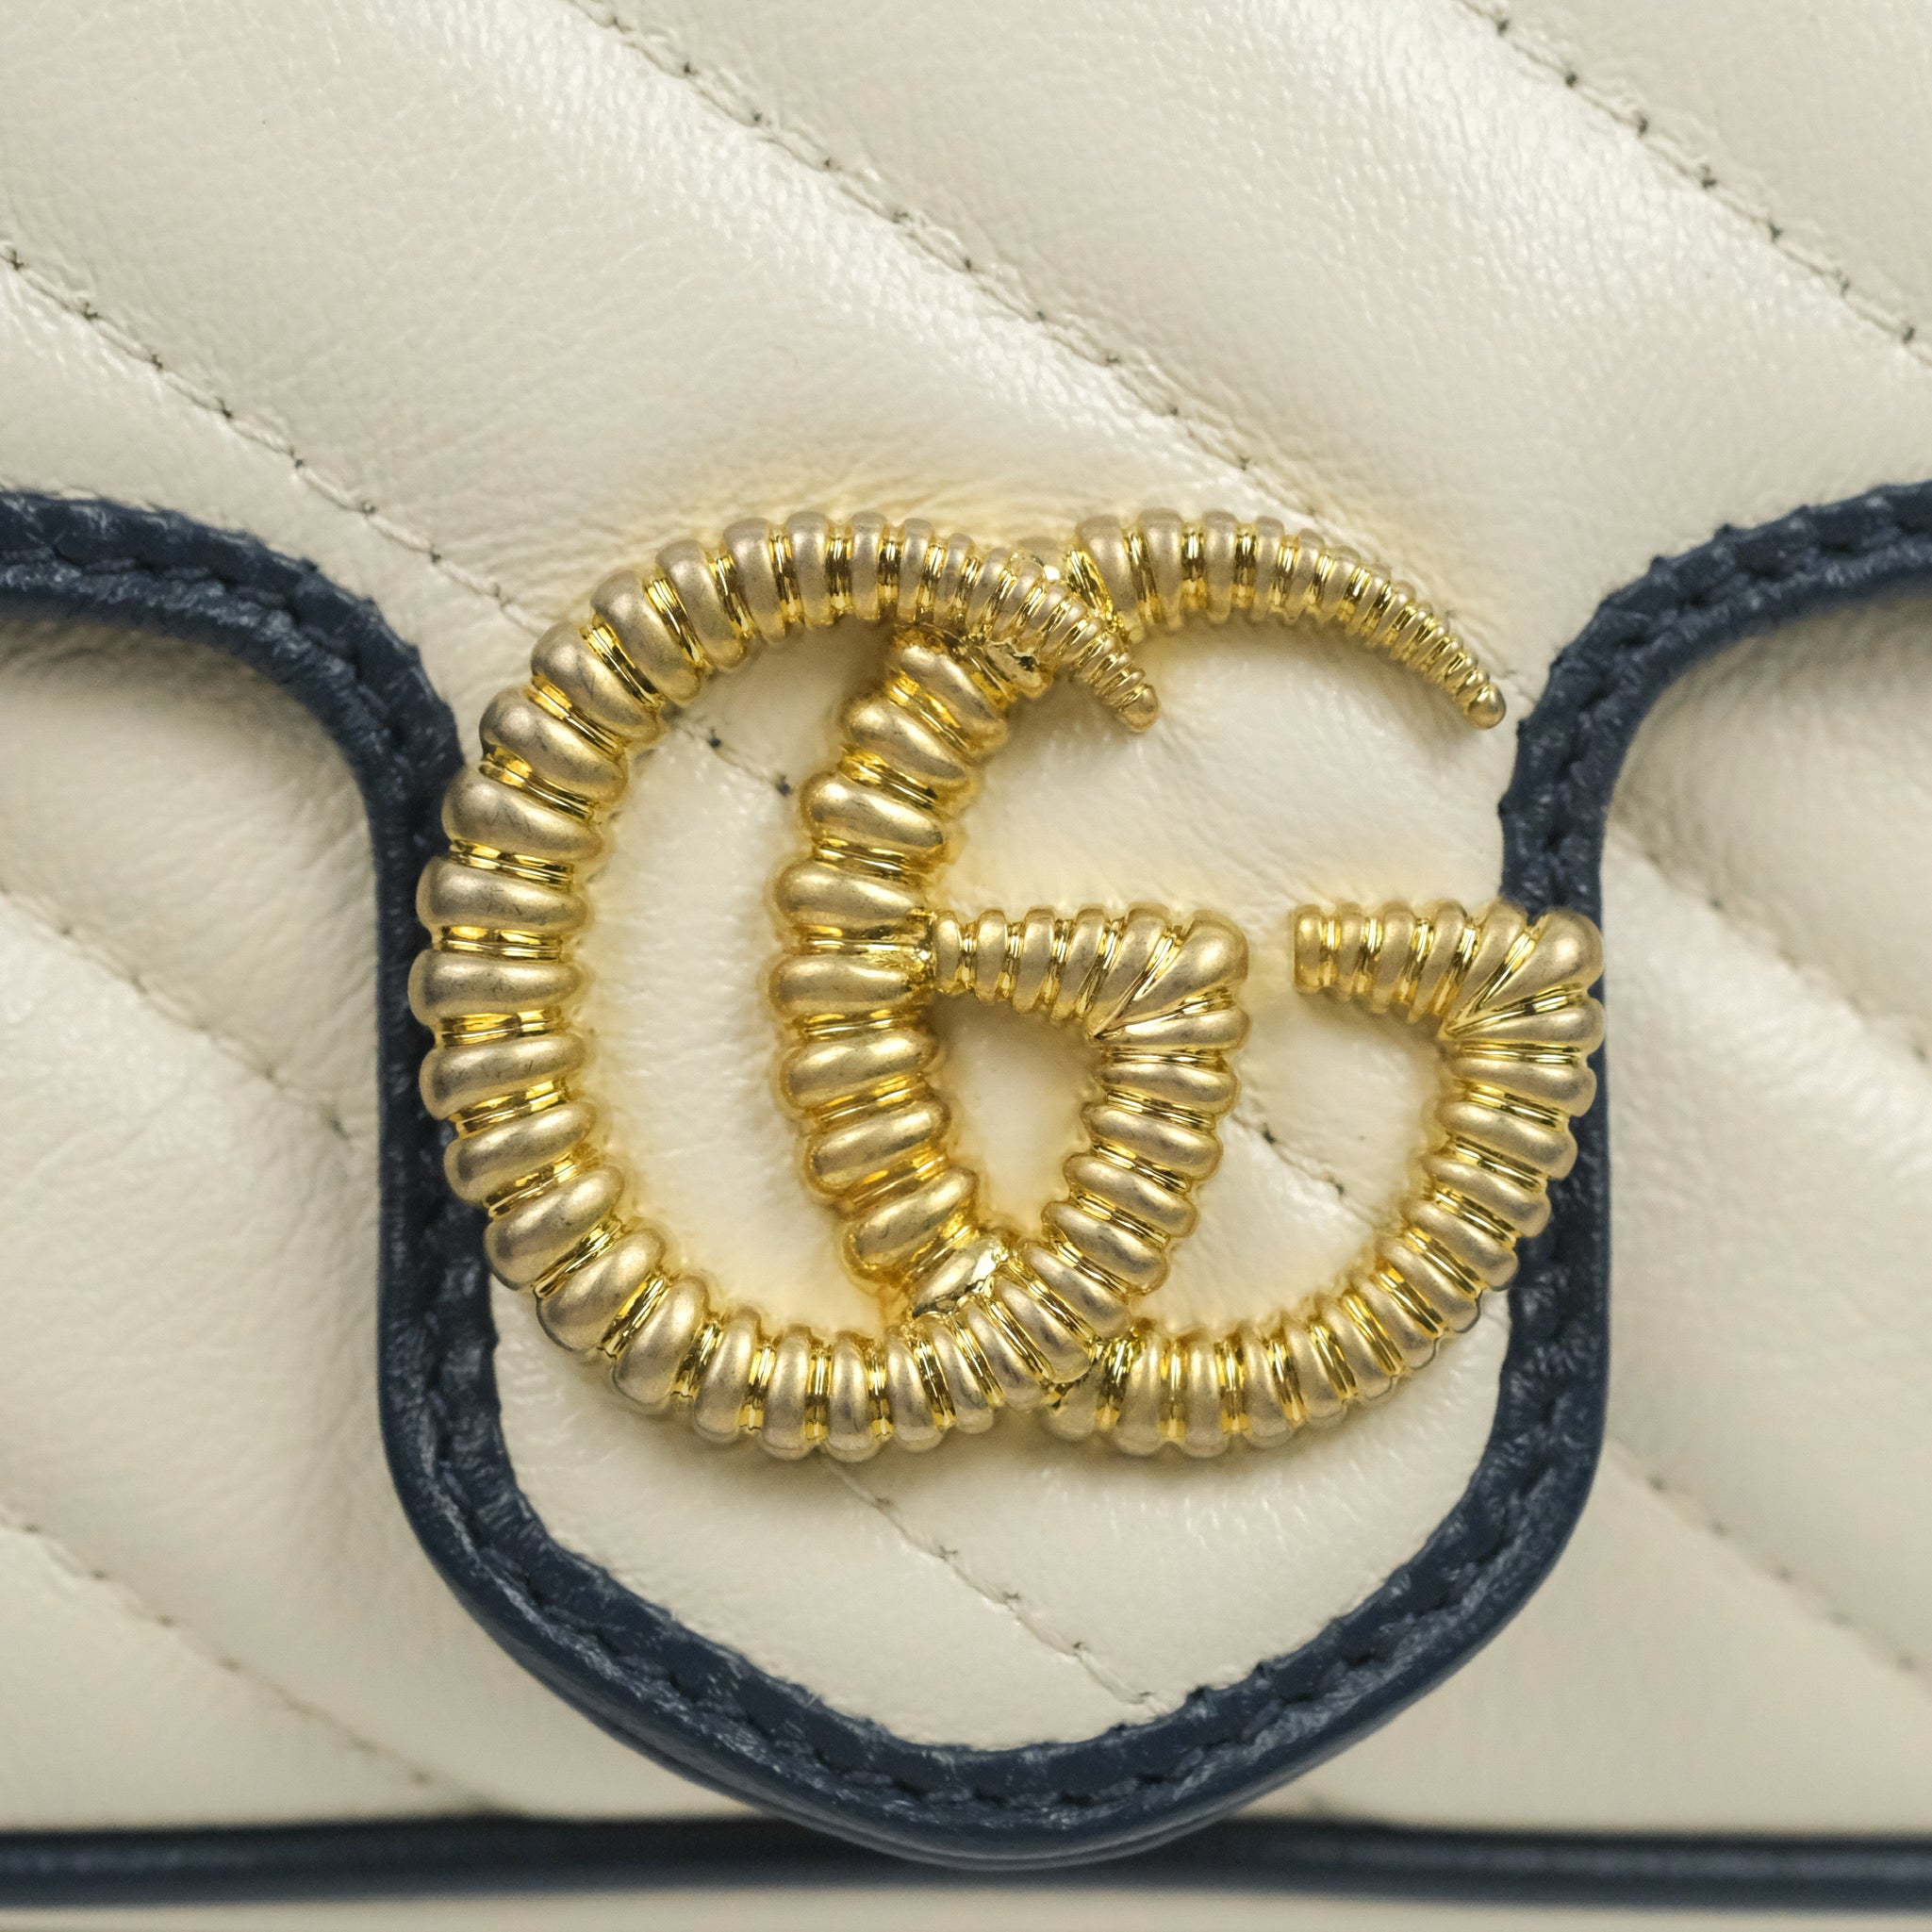 GG Marmont matelassé mini bag in white leather